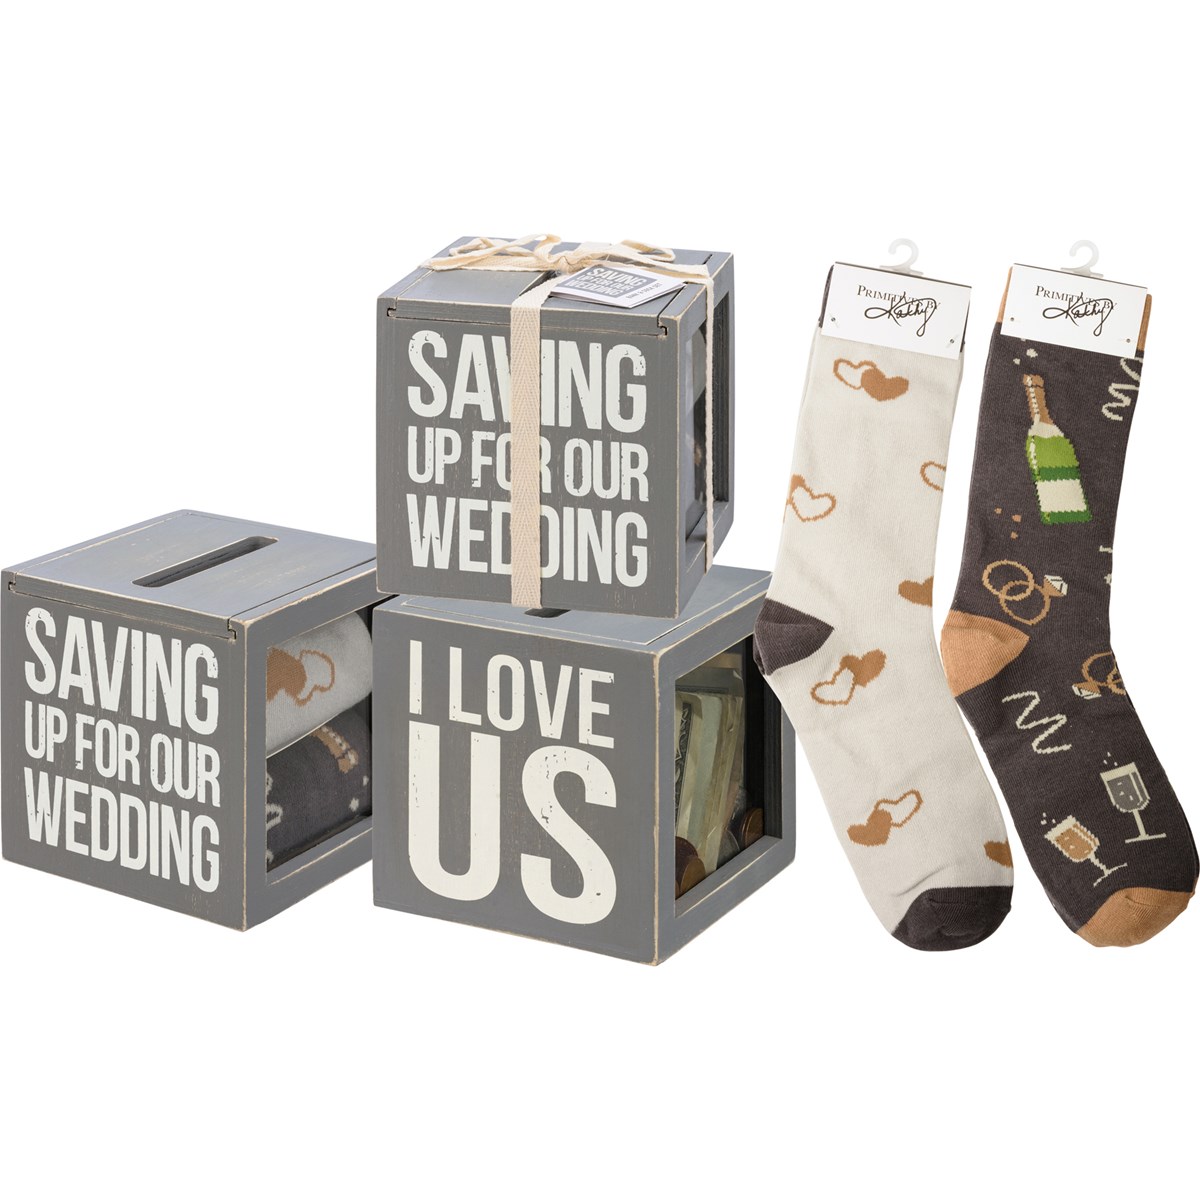 Saving Up For Our Wedding Bank And Socks Set - Wood, Glass, Cotton, Nylon, Spandex, Ribbon